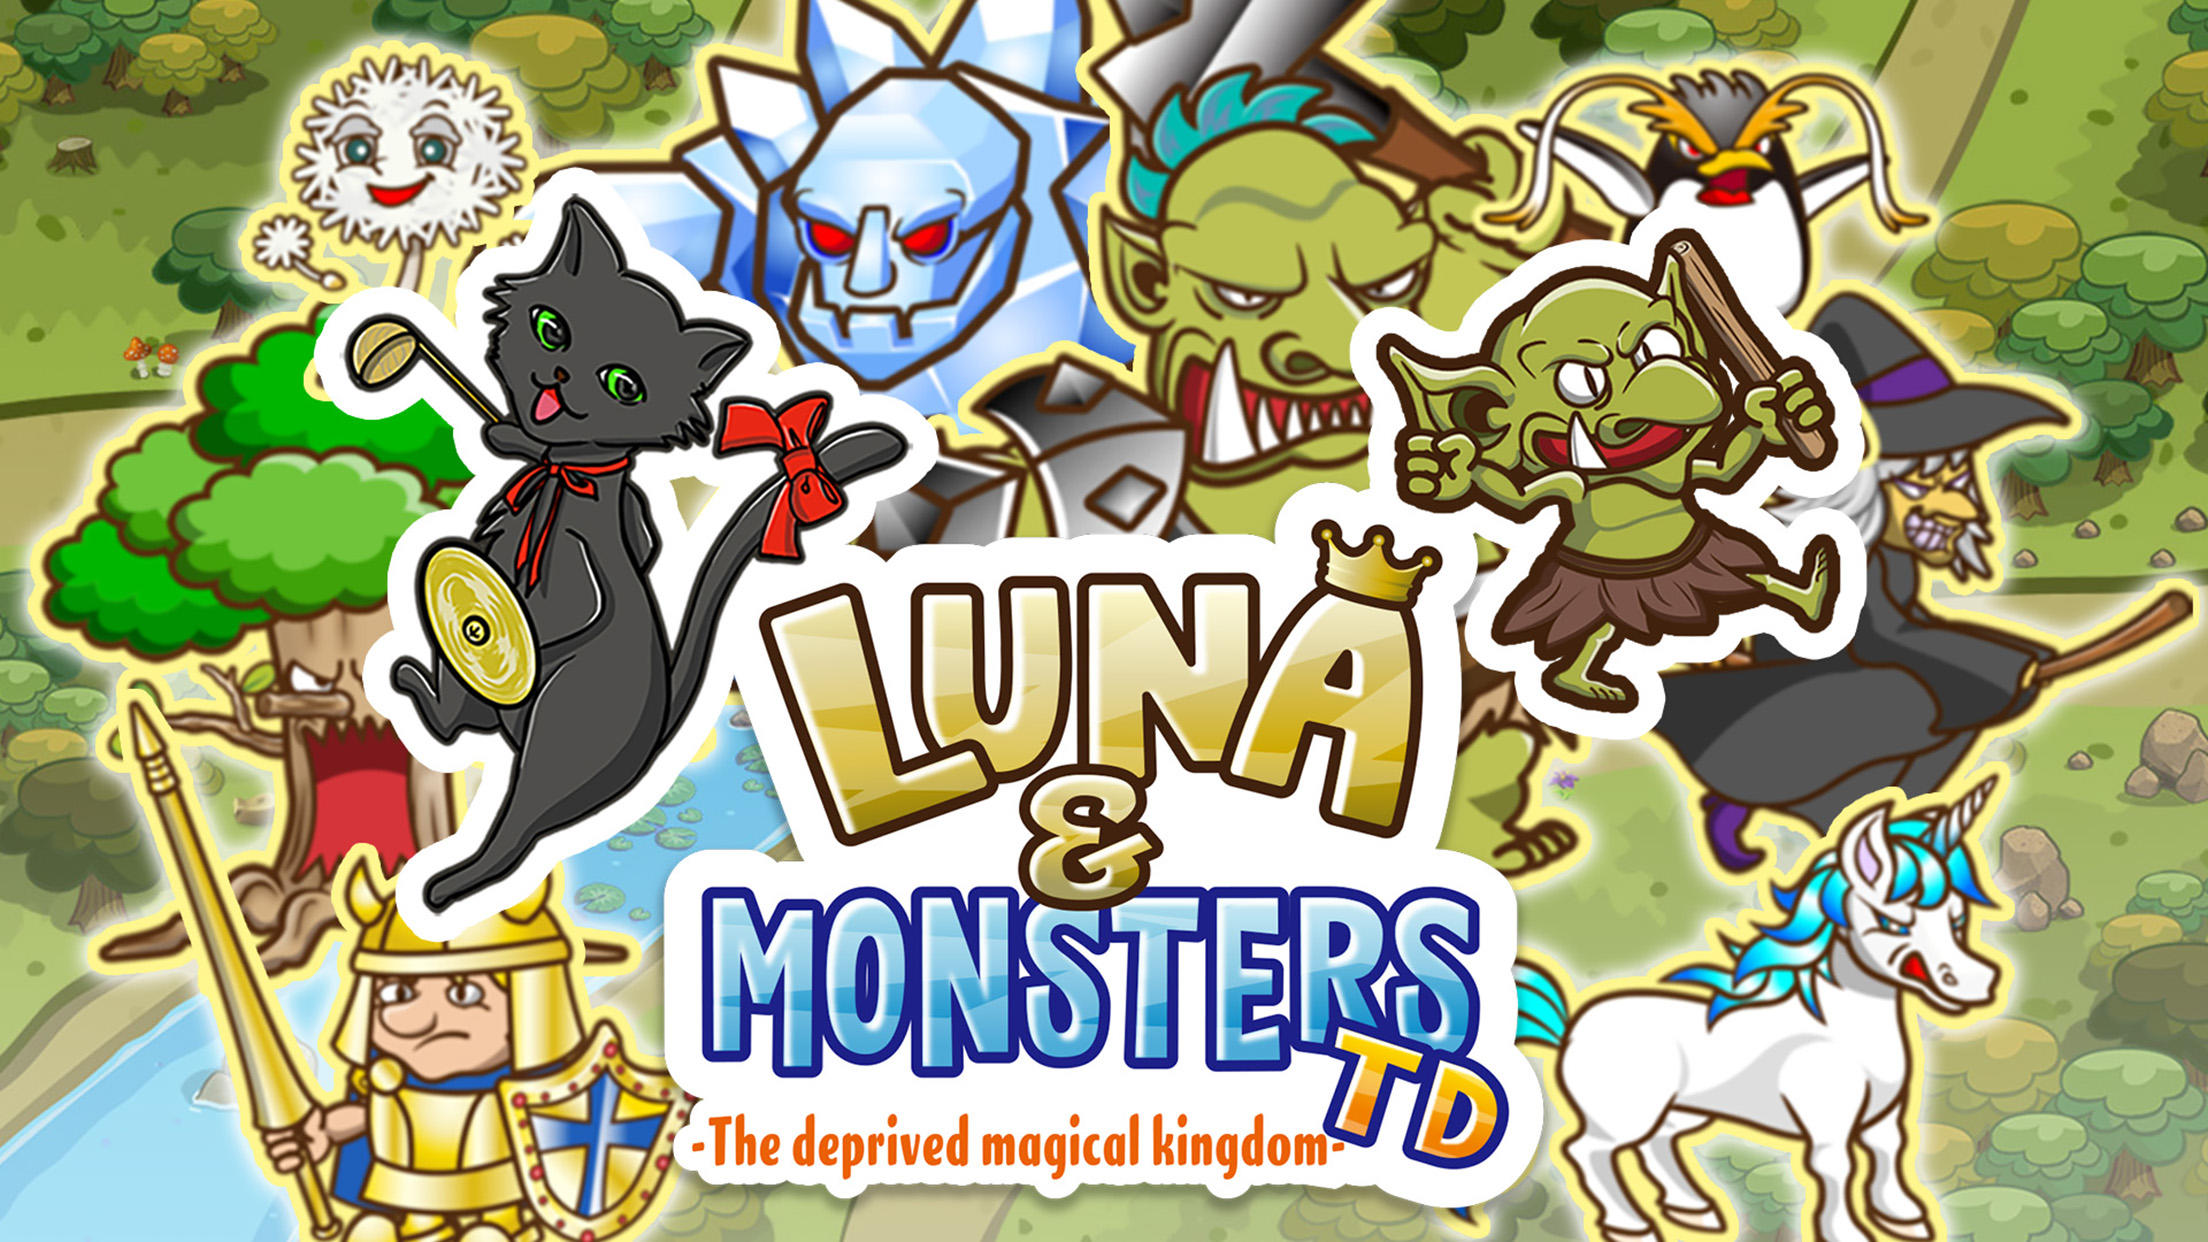 Screenshot 1 of Luna & Monsters 塔防 